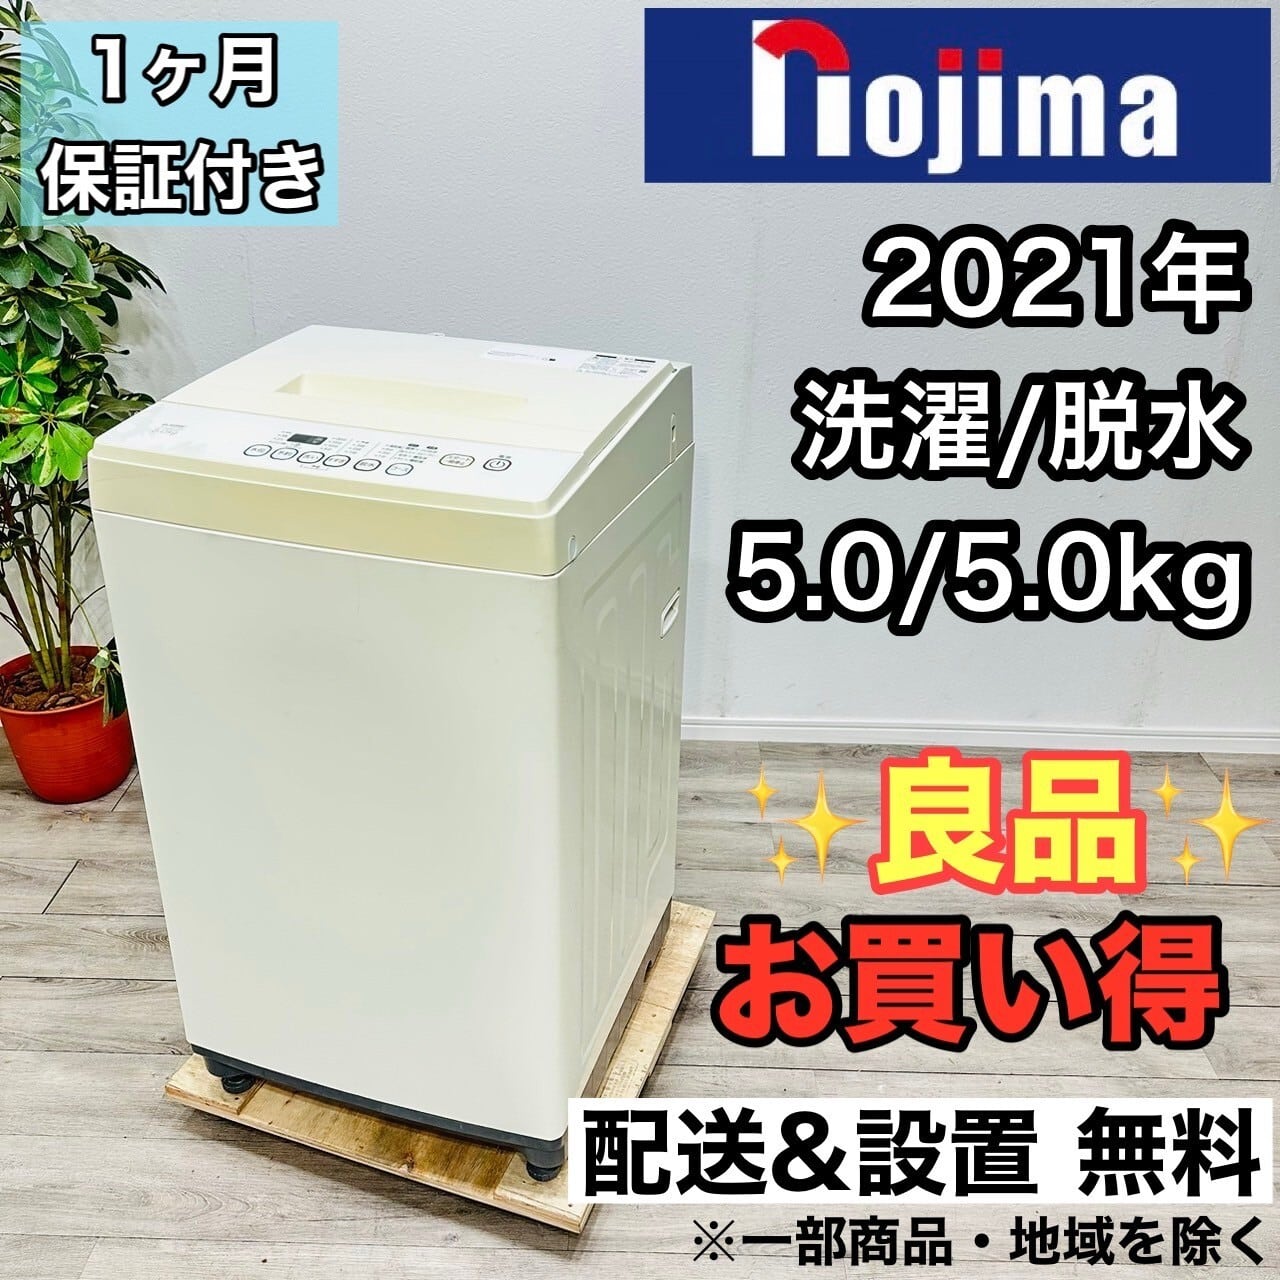 ♦️nojima a1851 洗濯機 5.0kg 2021年製 0.5♦️関西リユース本舗